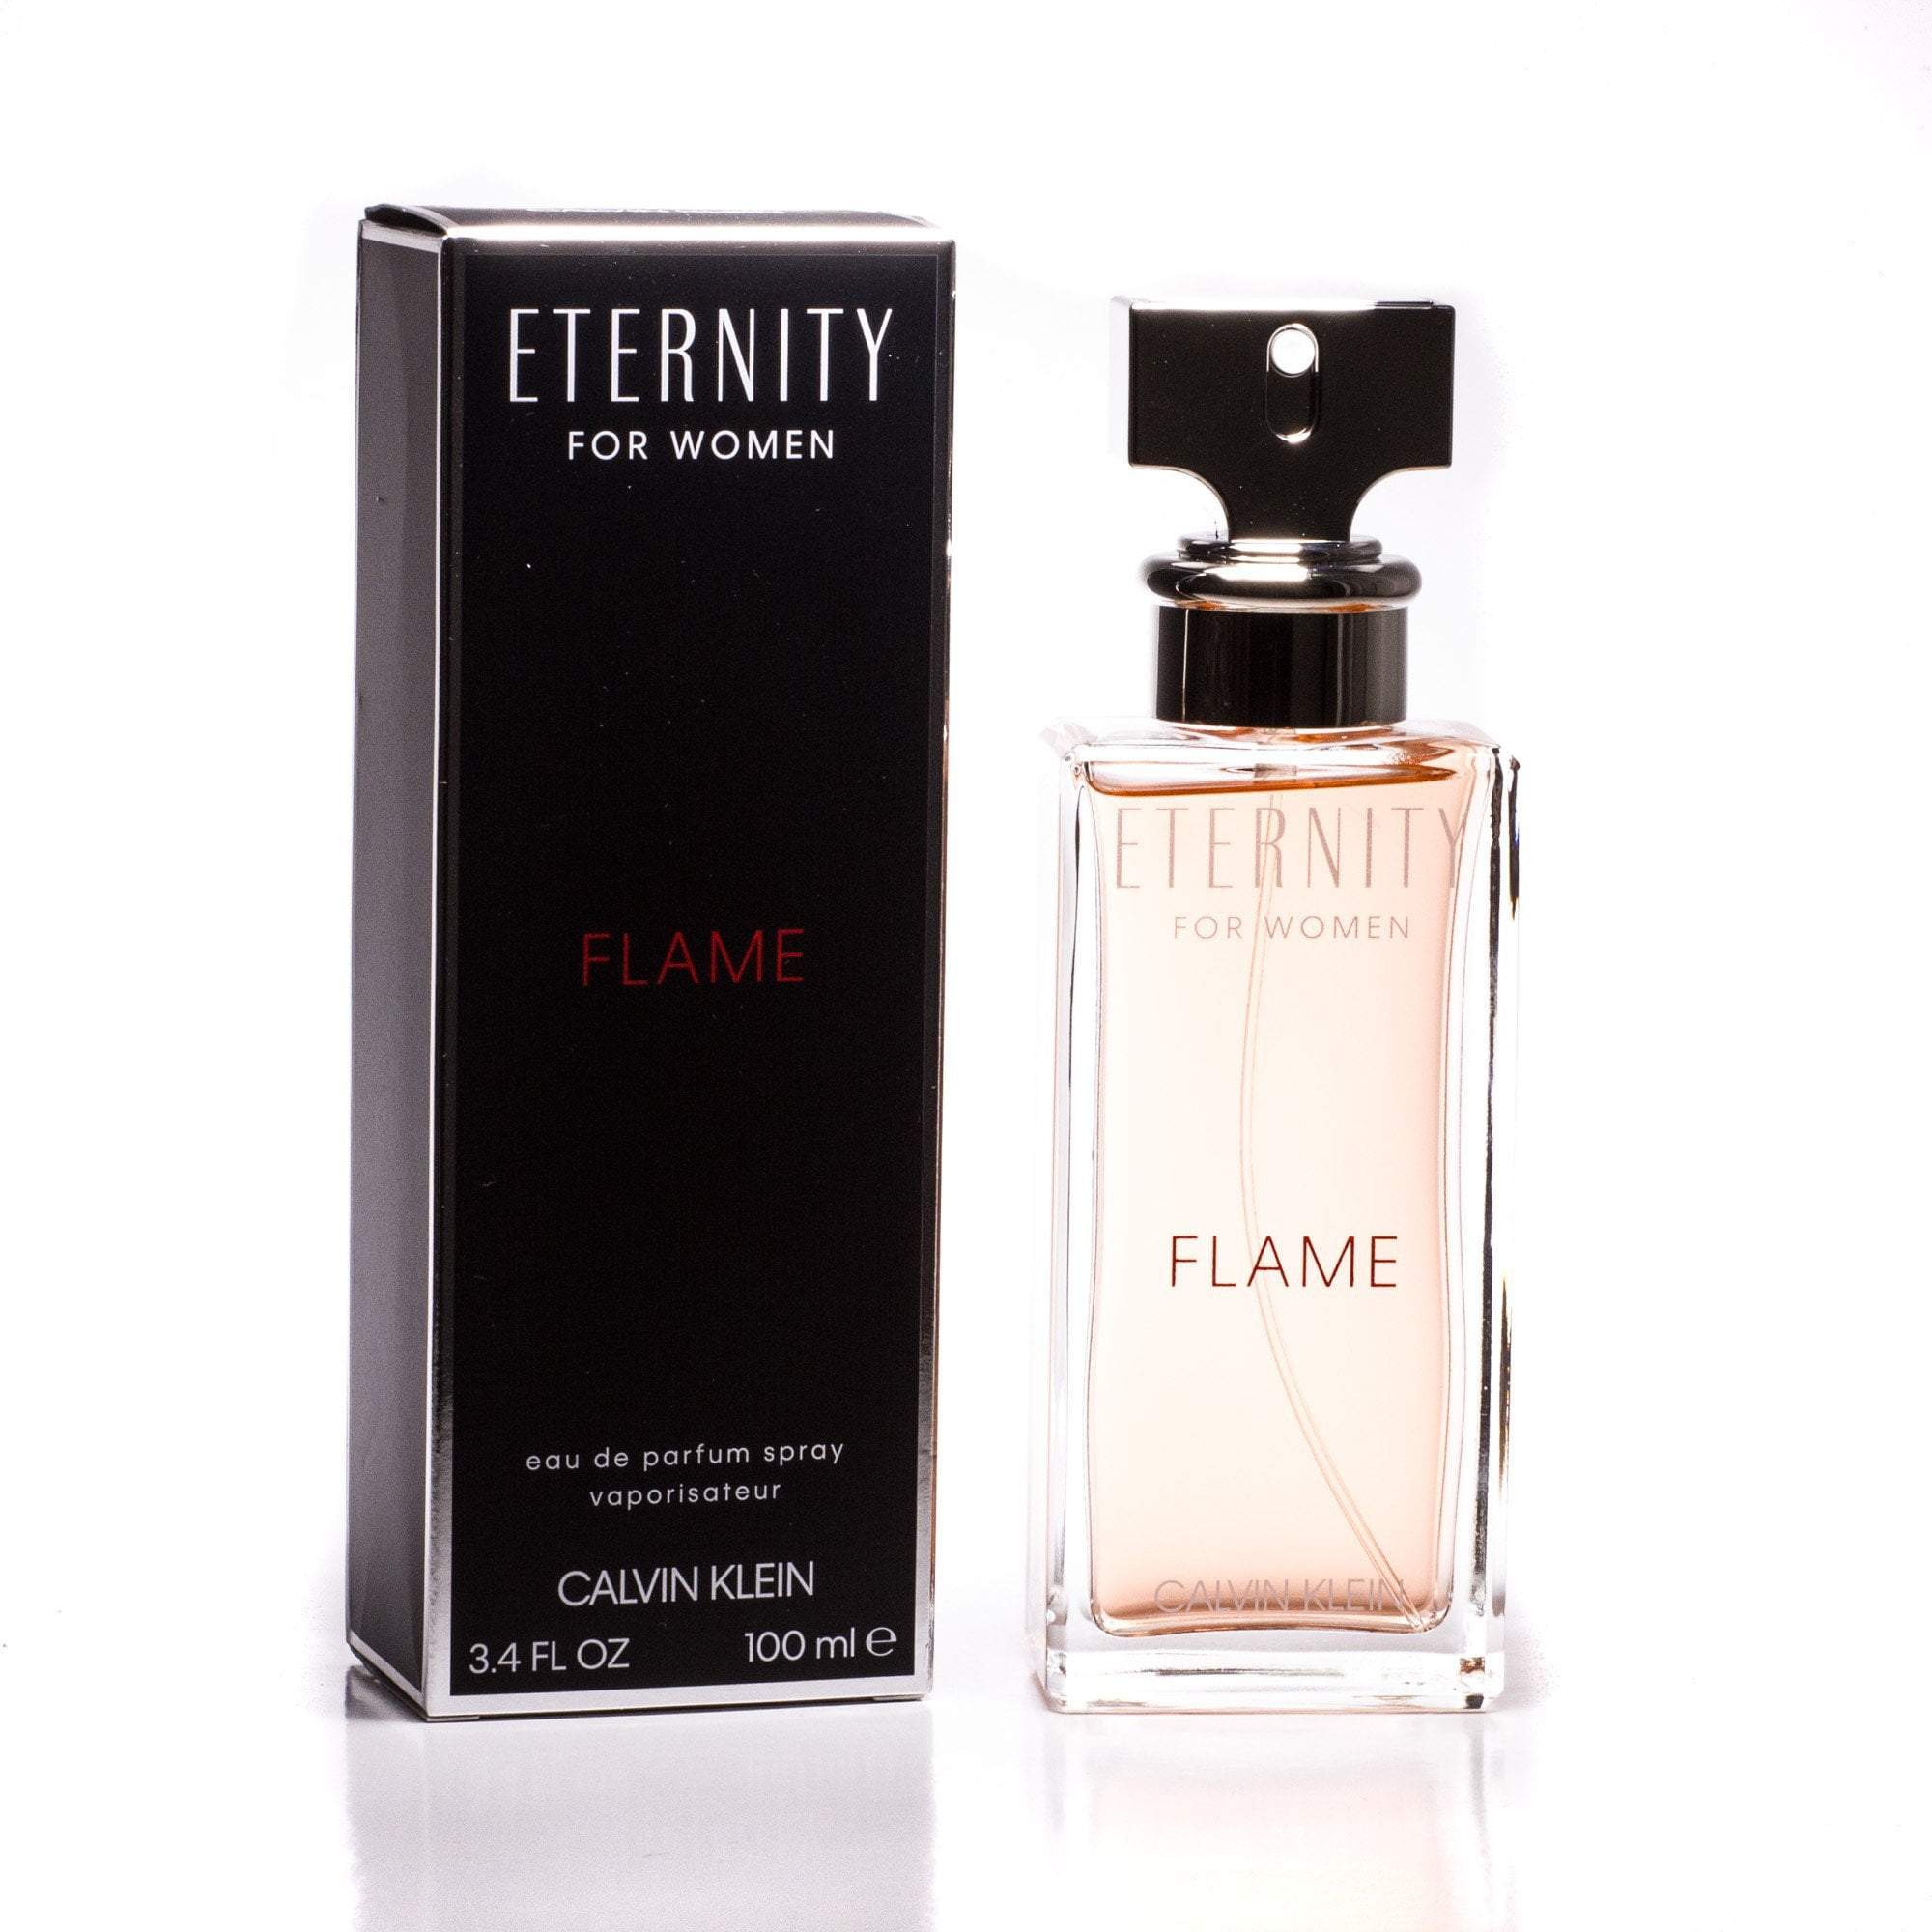 Eternity Flame Eau de Parfum Spray for Women by Calvin Klein Featured image